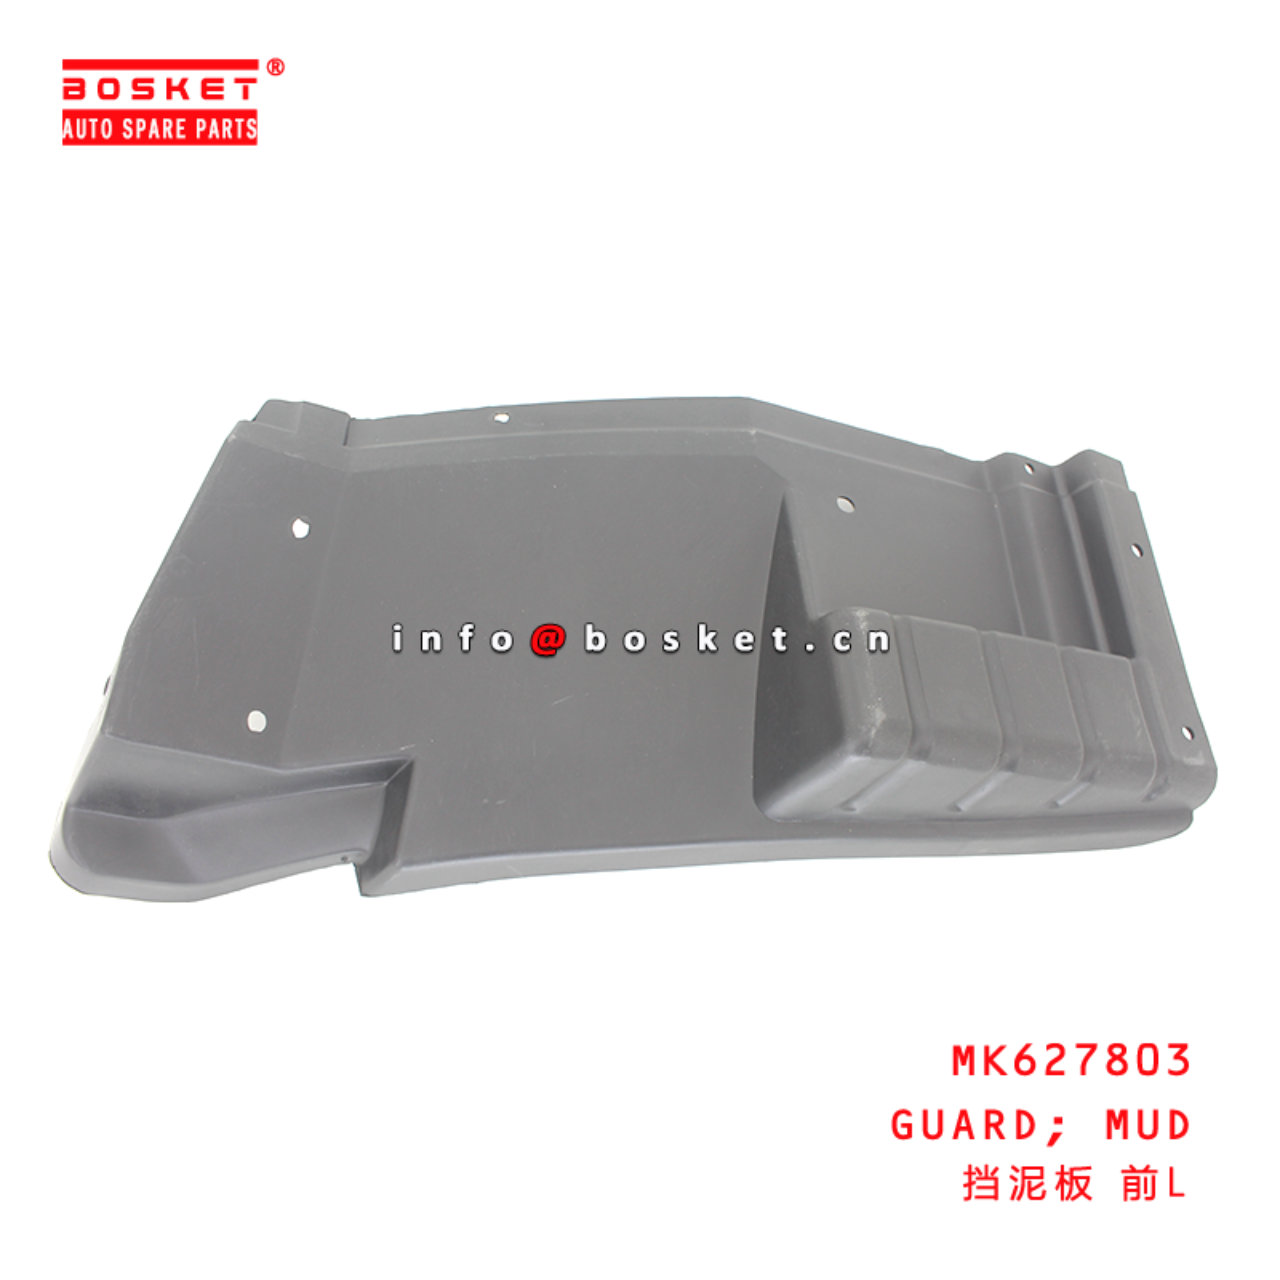 MK627803 Mud Guard Suitable for ISUZU HINO300